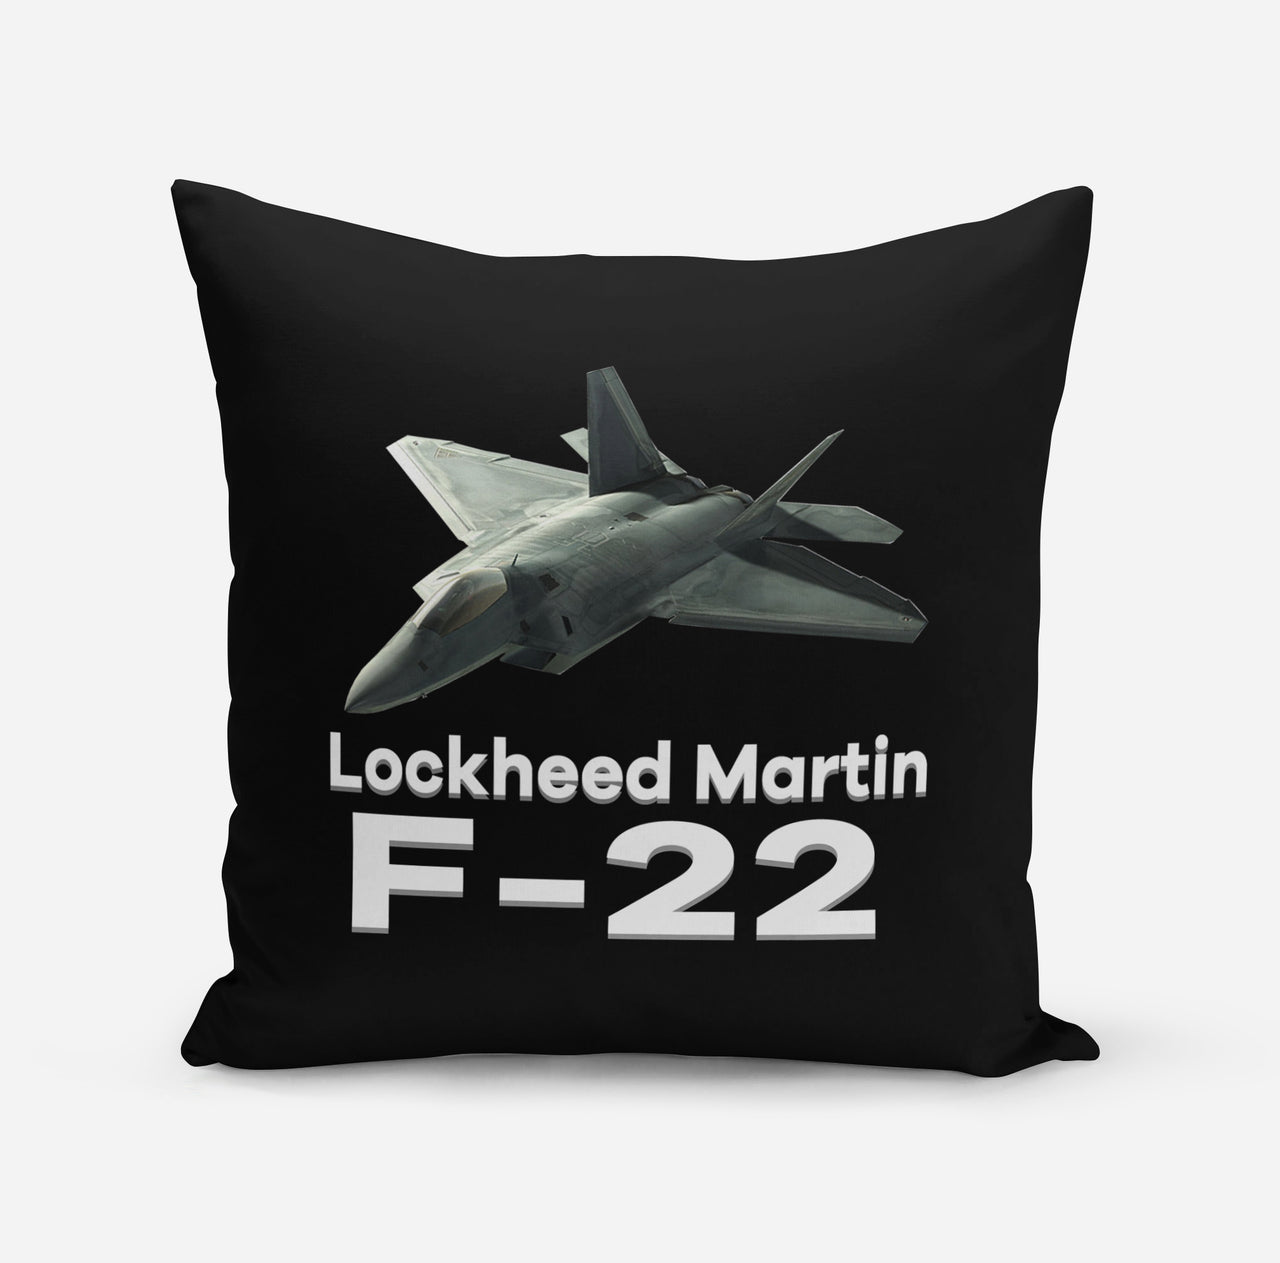 The Lockheed Martin F22 Designed Pillows